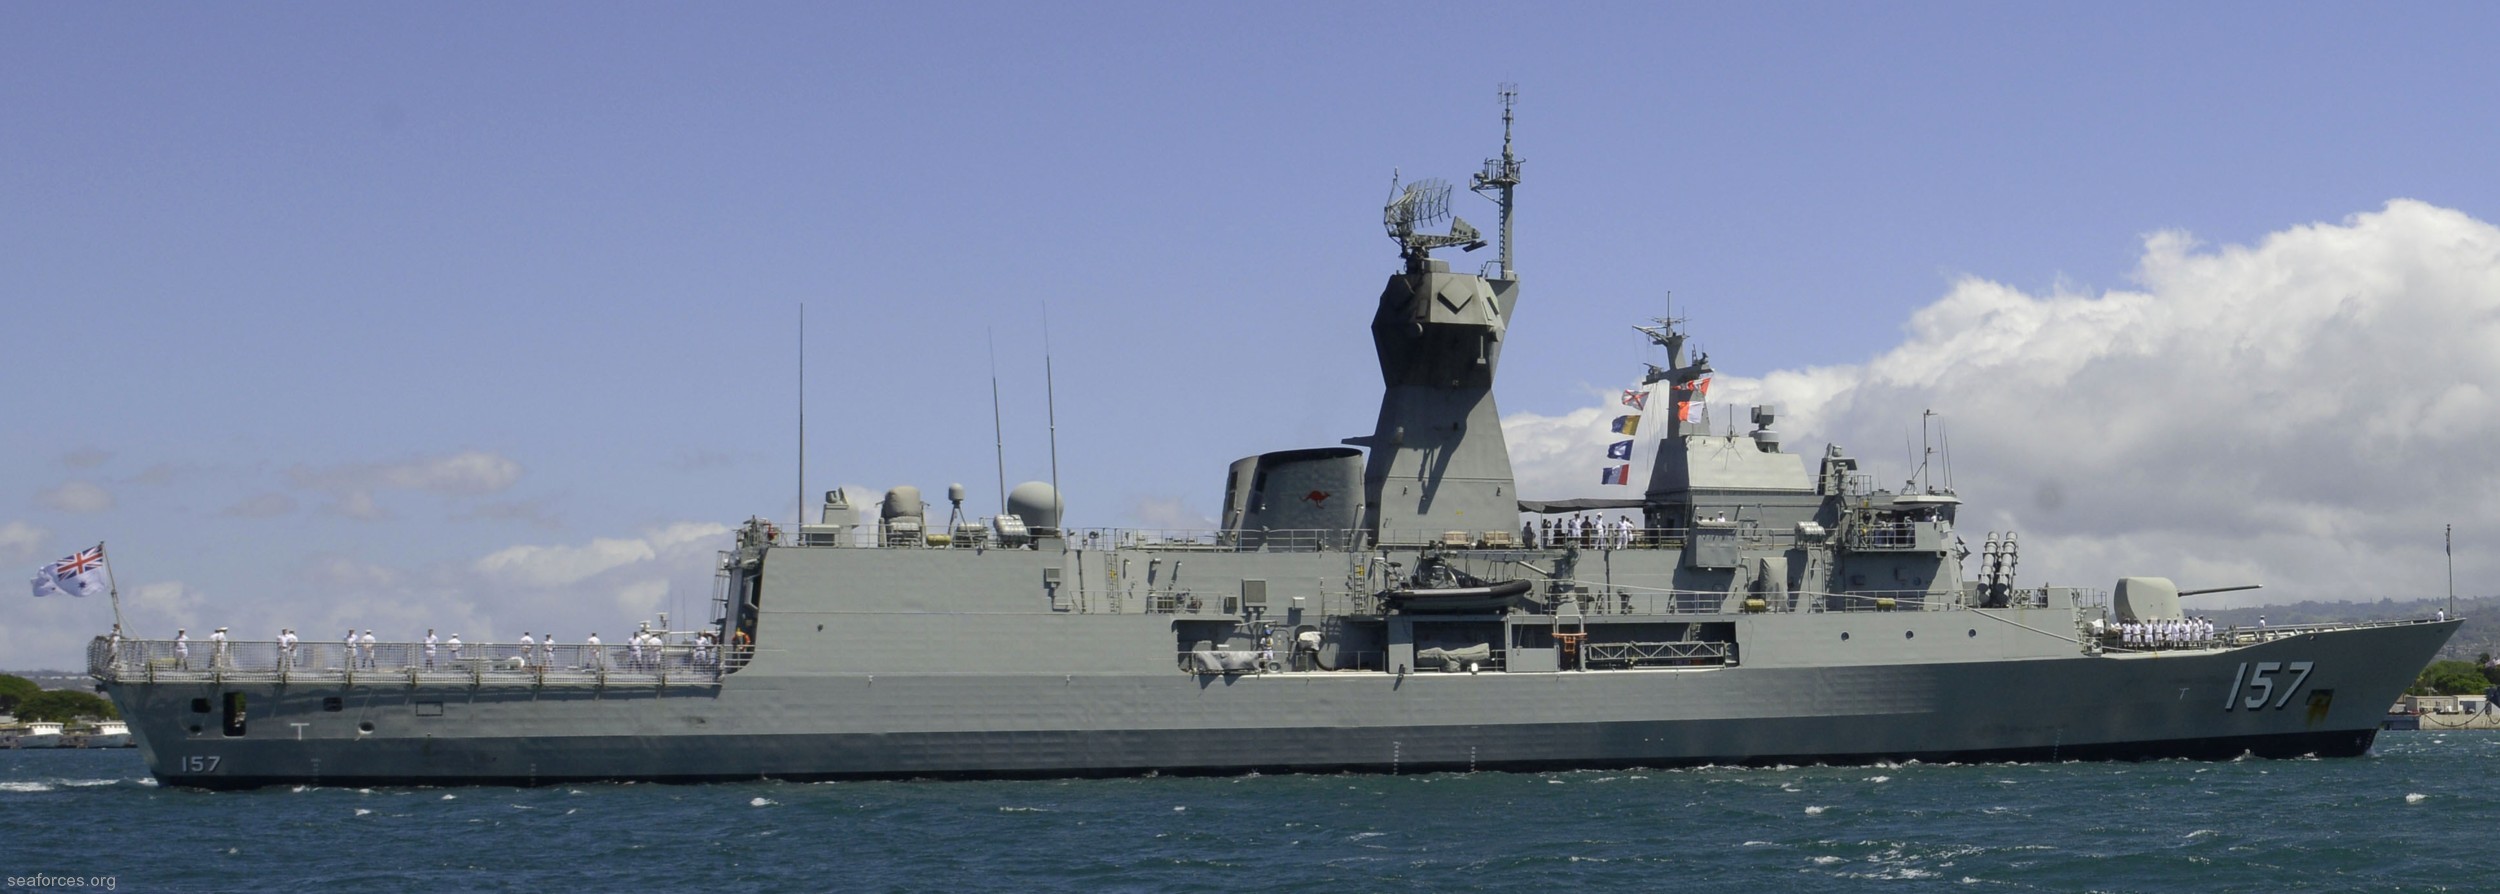 ffh-157 hmas perth anzac class frigate royal australian navy 2013 17